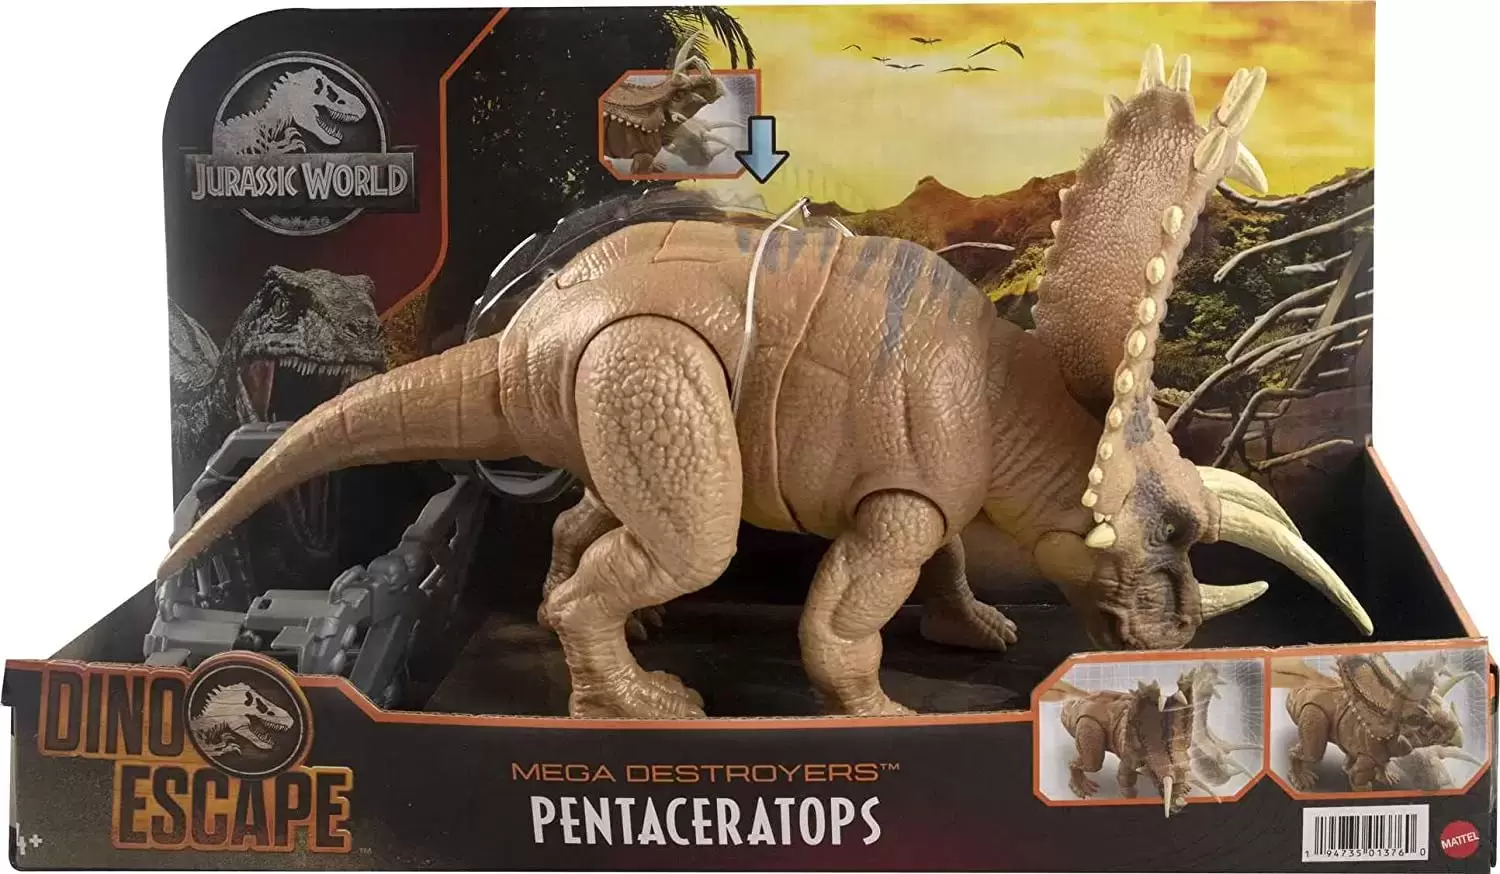 Jurassic World : Camp Cretaceous / Dino Escape - Pentaceratops - Mega Destroyers